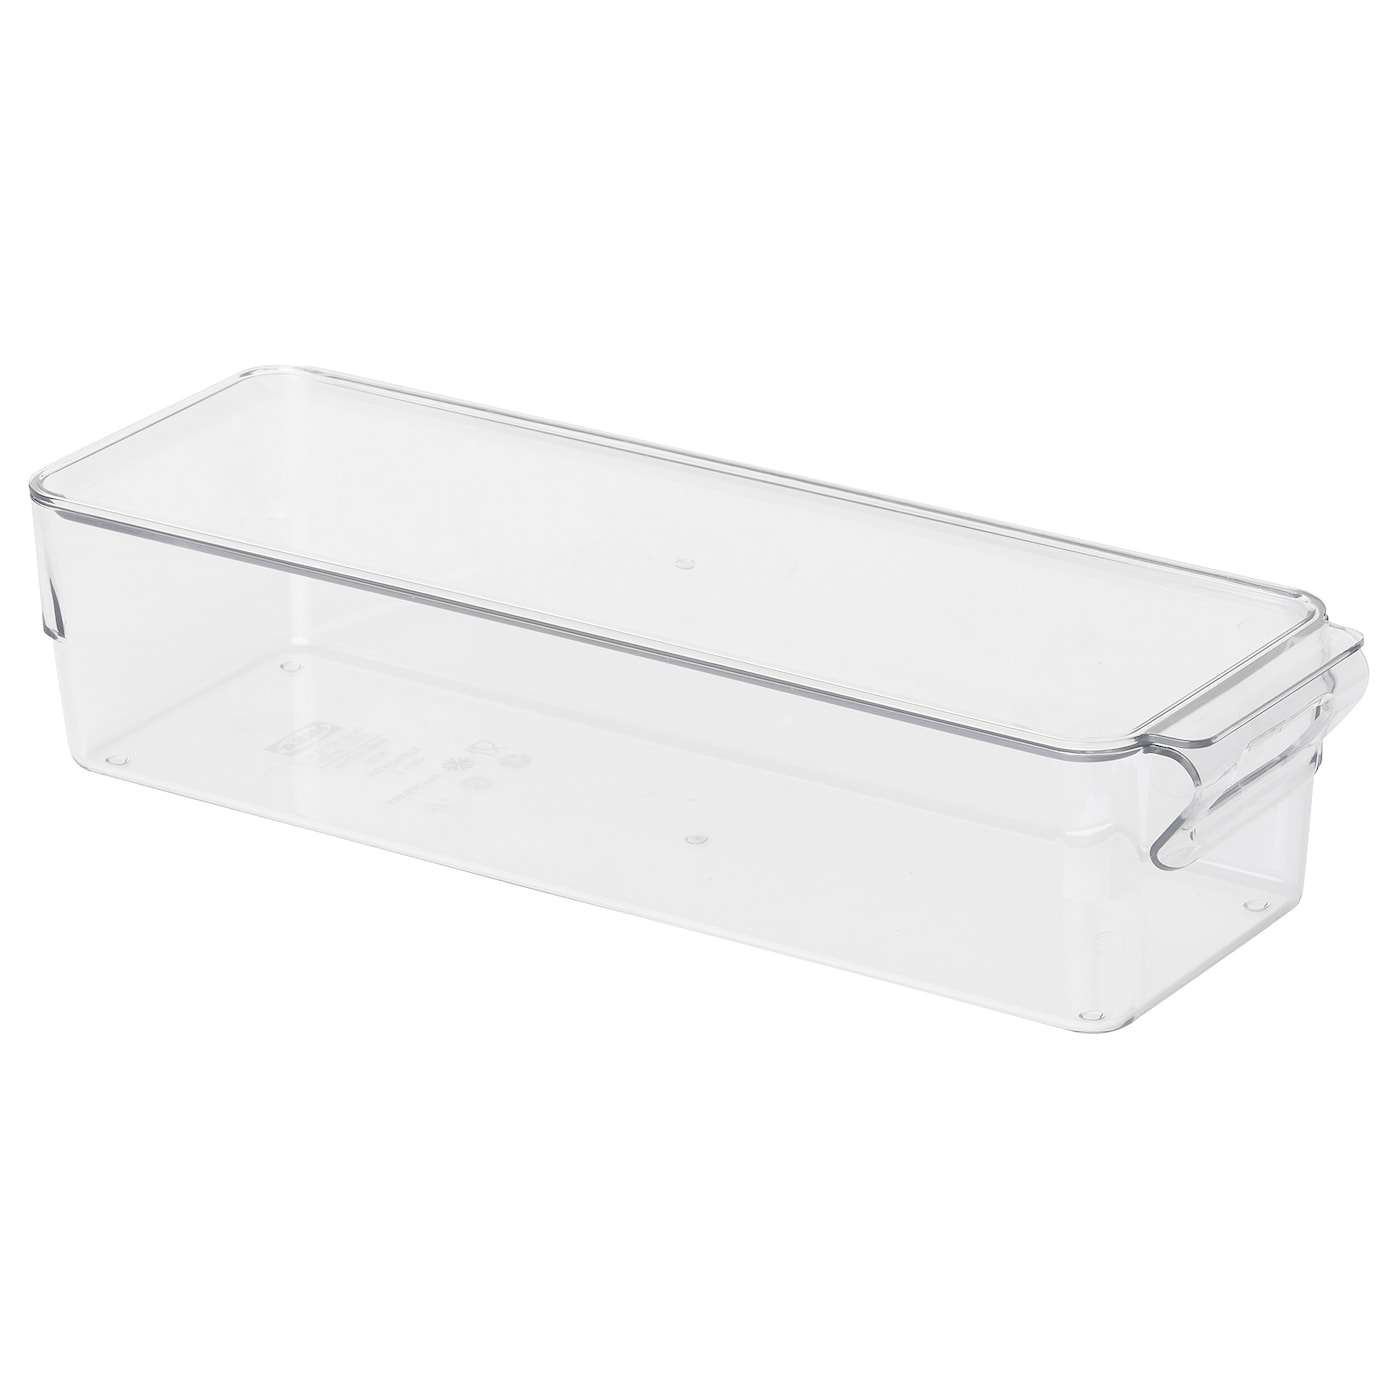 KLIPPKAKTUS 克里卡克冰箱储物盒透明- IKEA